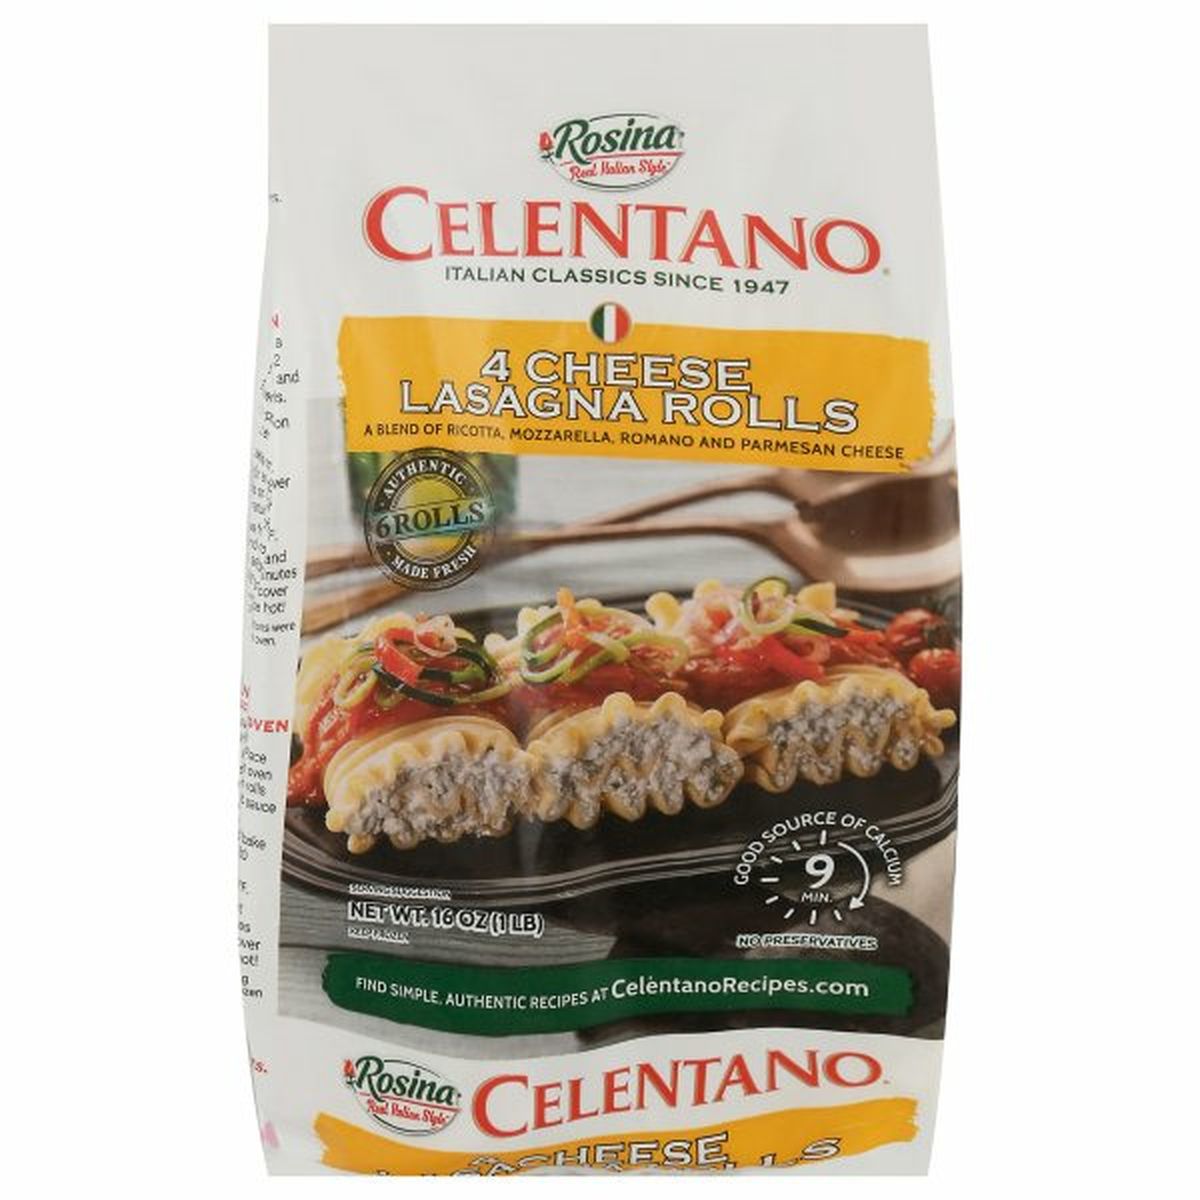 Calories in Celentano Lasagna Rolls, 4 Cheese